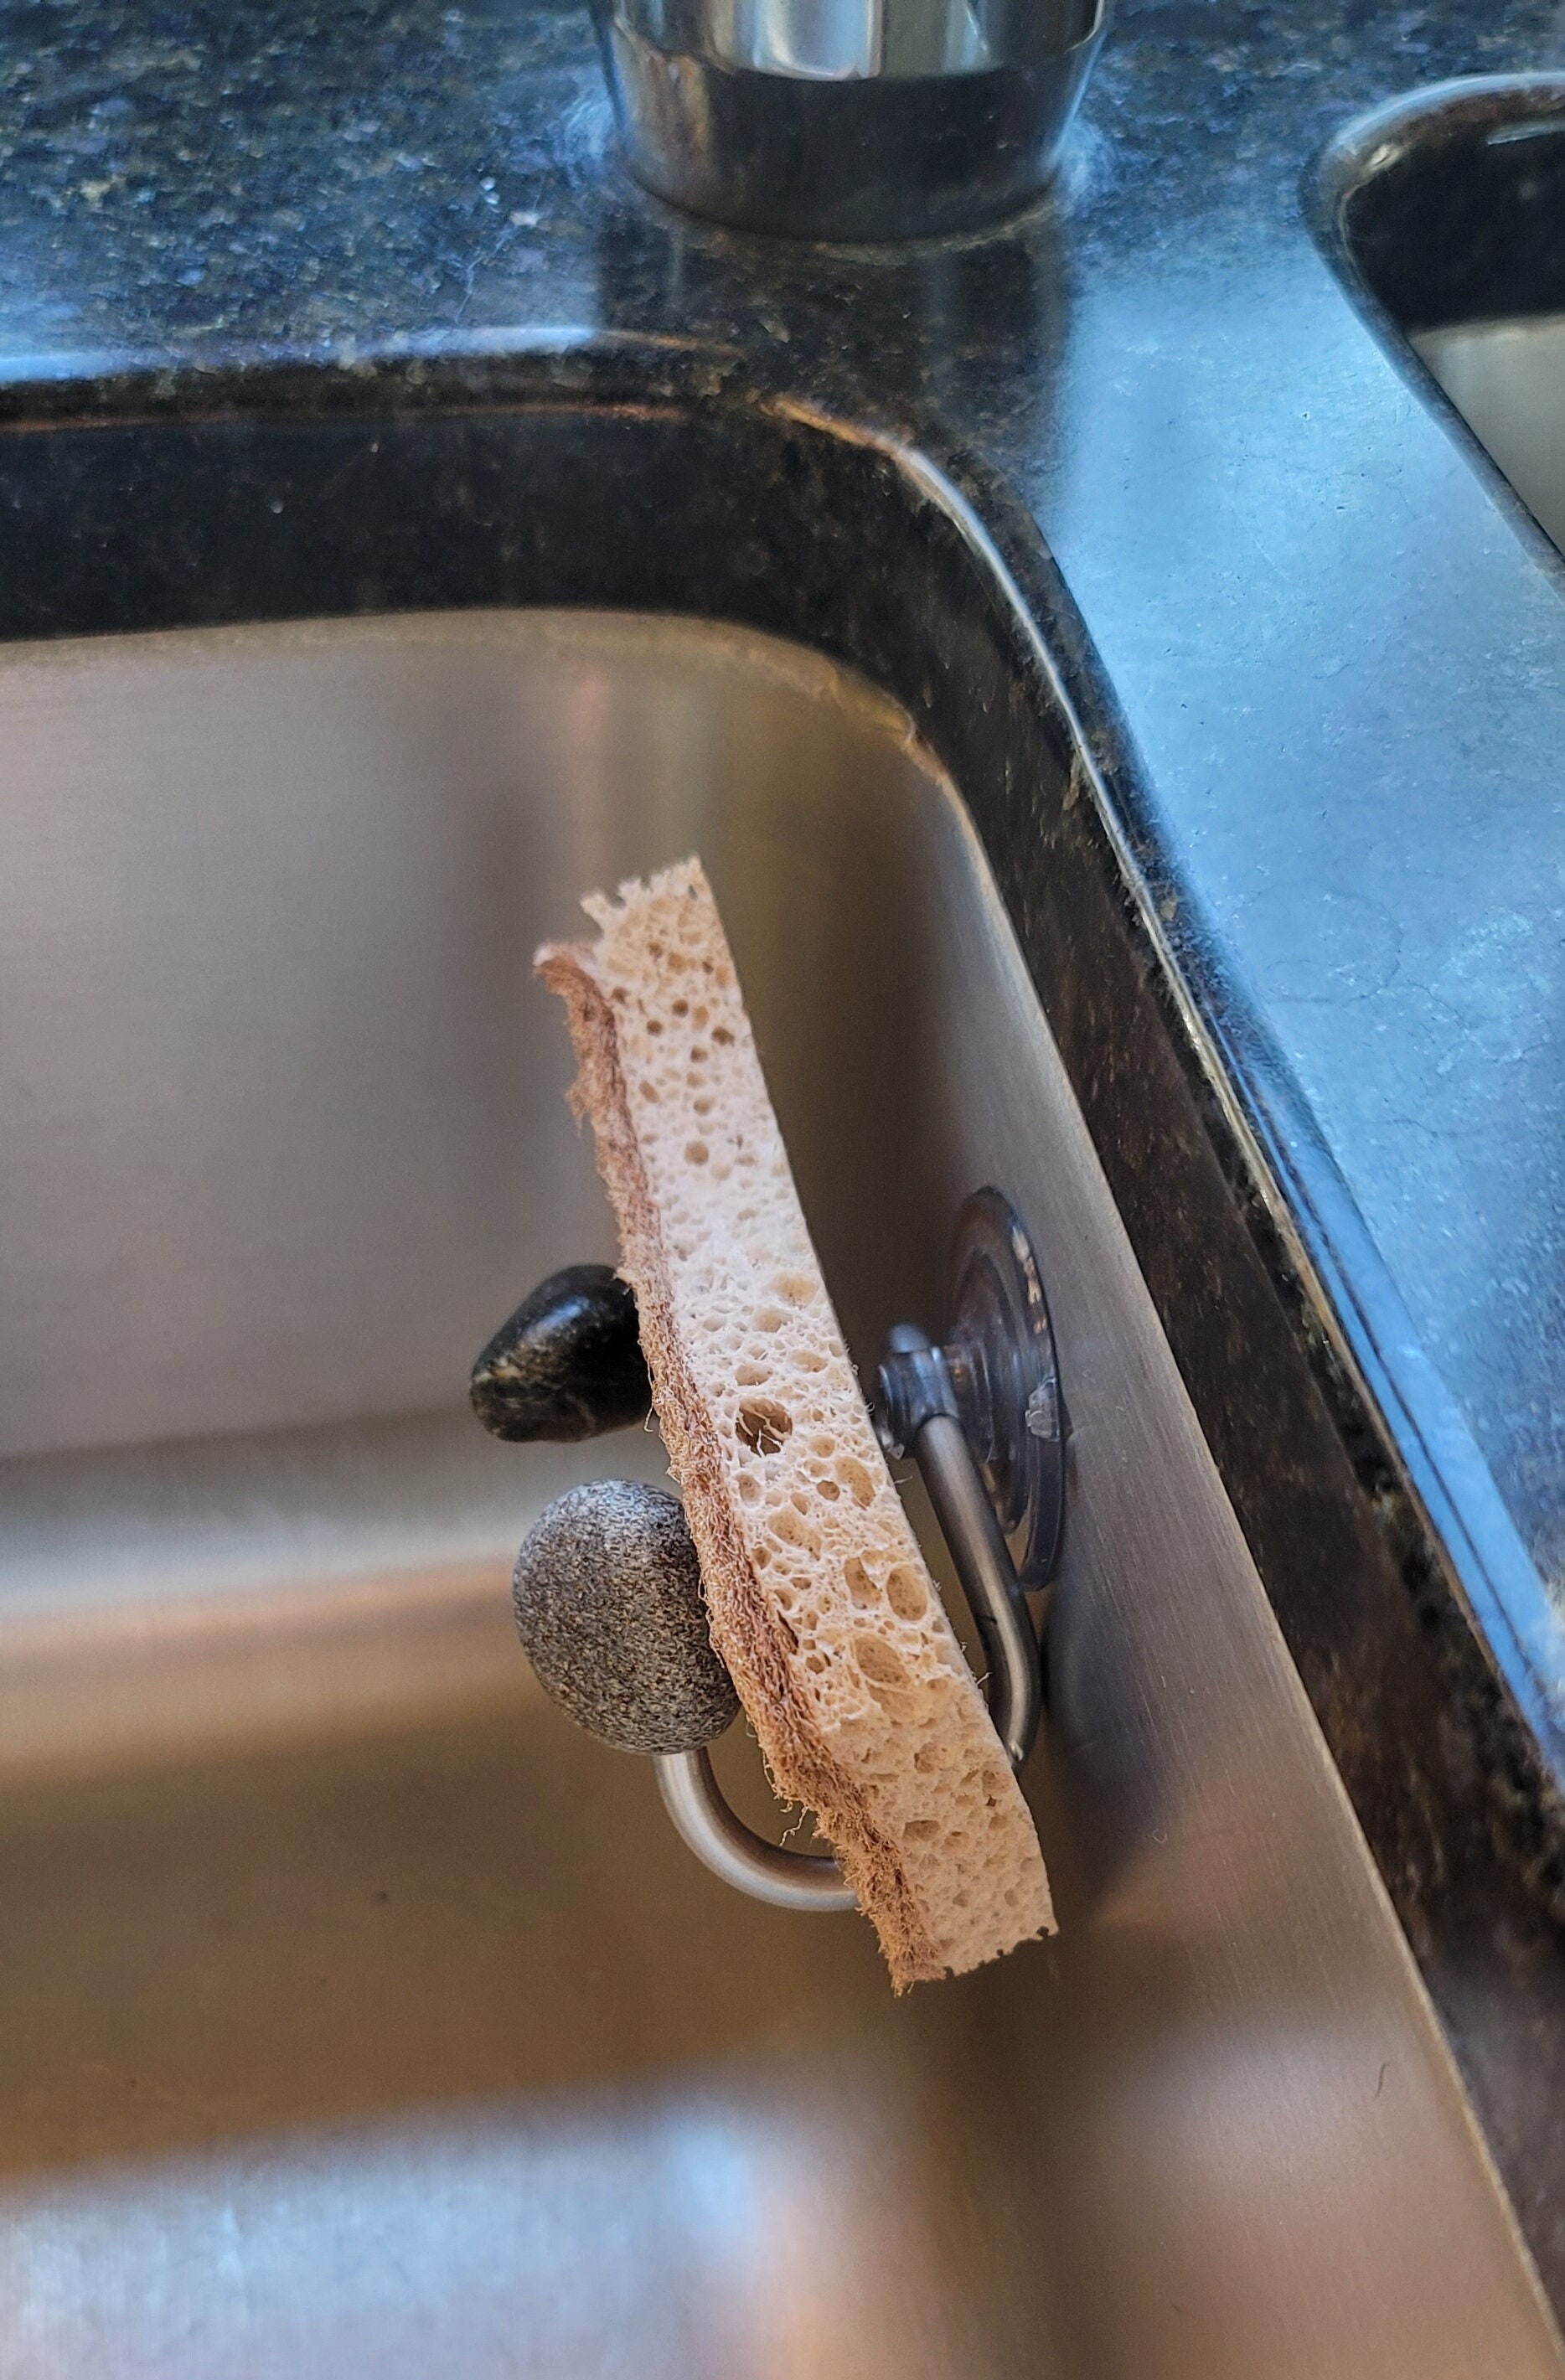 2/PK Self-Adhesive Sink Adjustable Dishwand(Dish Wand)Holder Kitchen Sink  Caddy